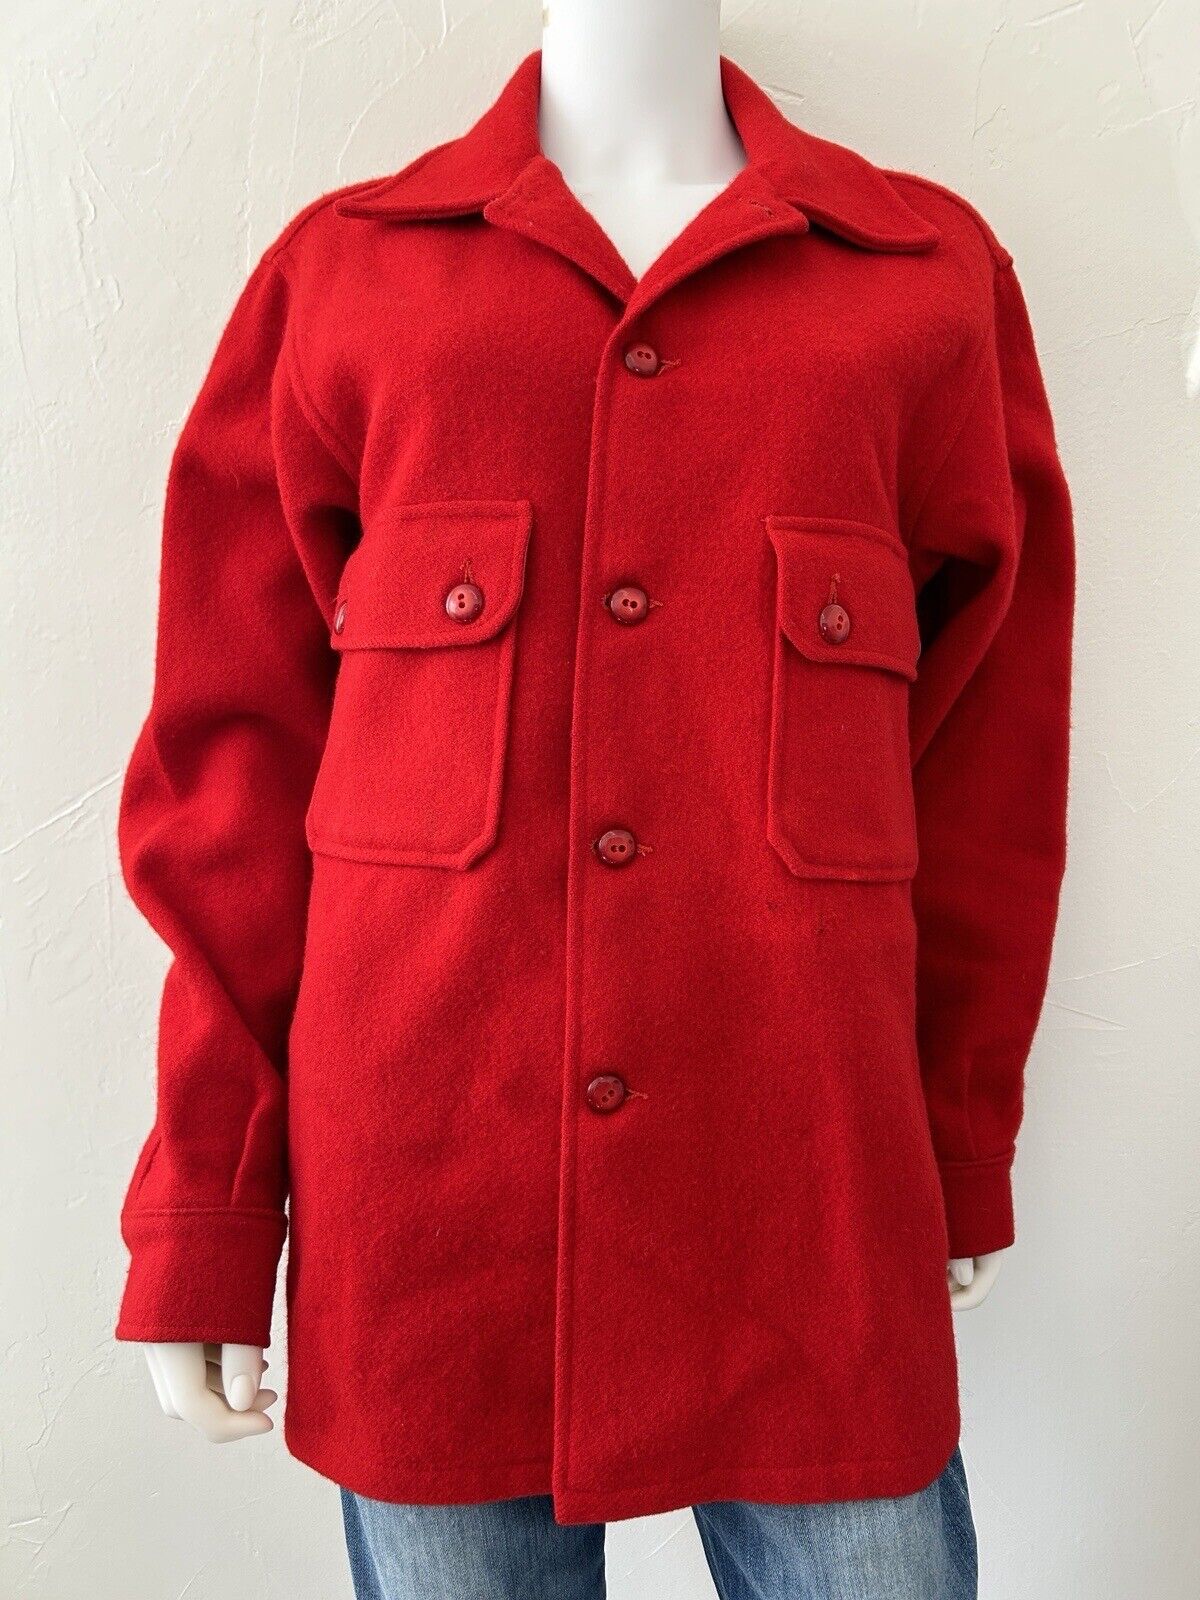 Vintage 1950’s Wool BSA Boy Scouts Red Camp Shirt Jacket Men’s 42